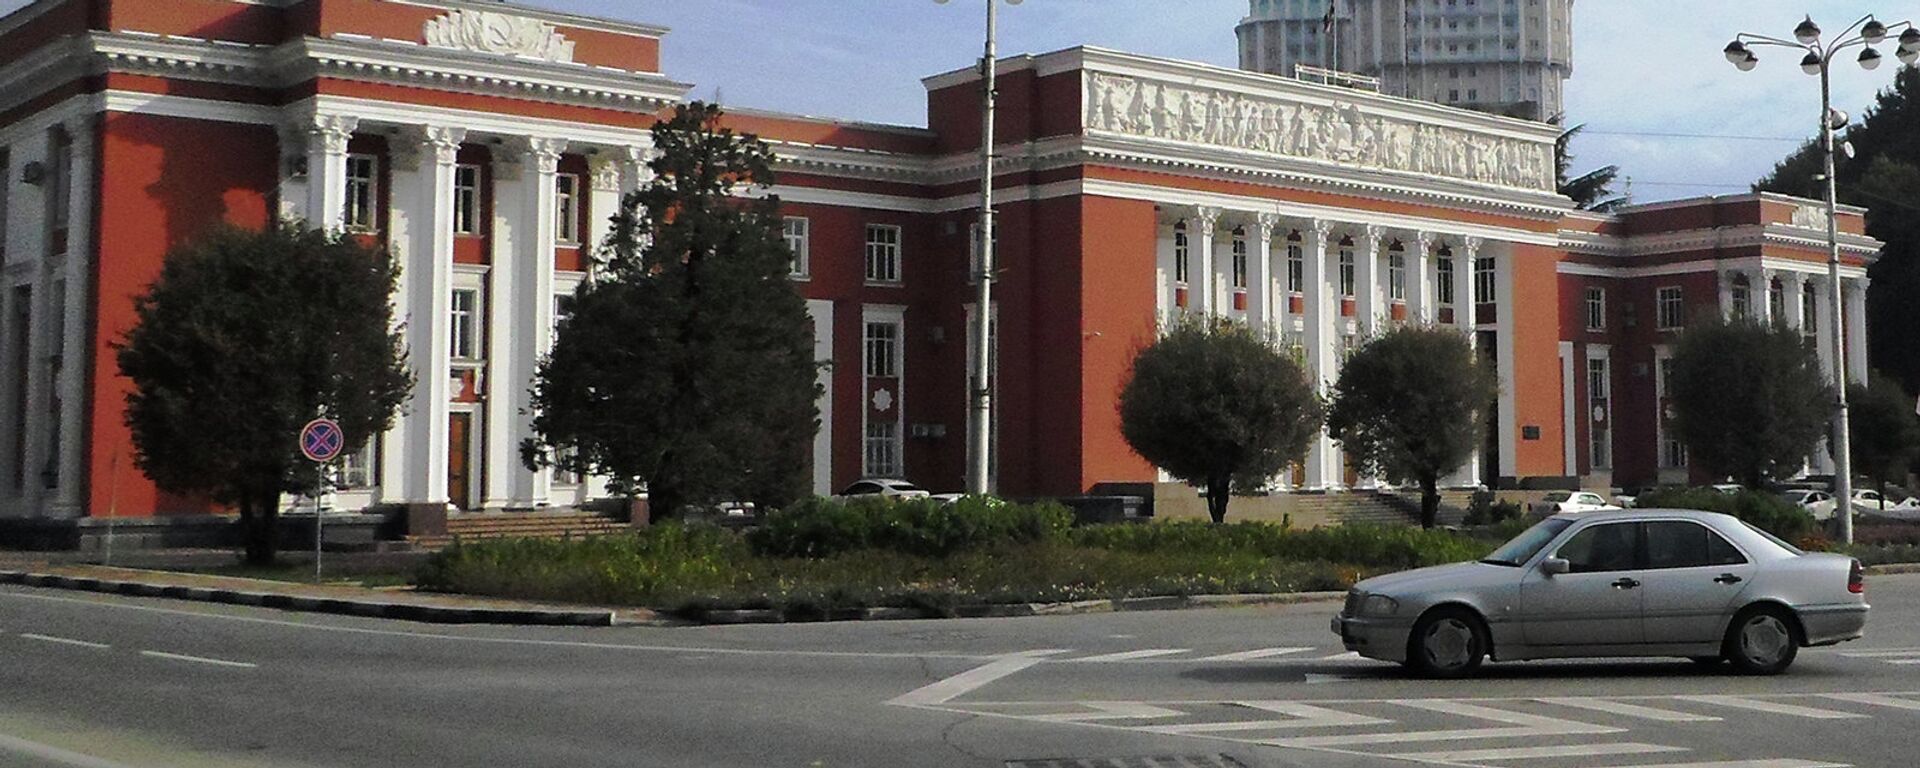 Здание парламента Таджикистана, архивное фото - Sputnik Тоҷикистон, 1920, 16.04.2021